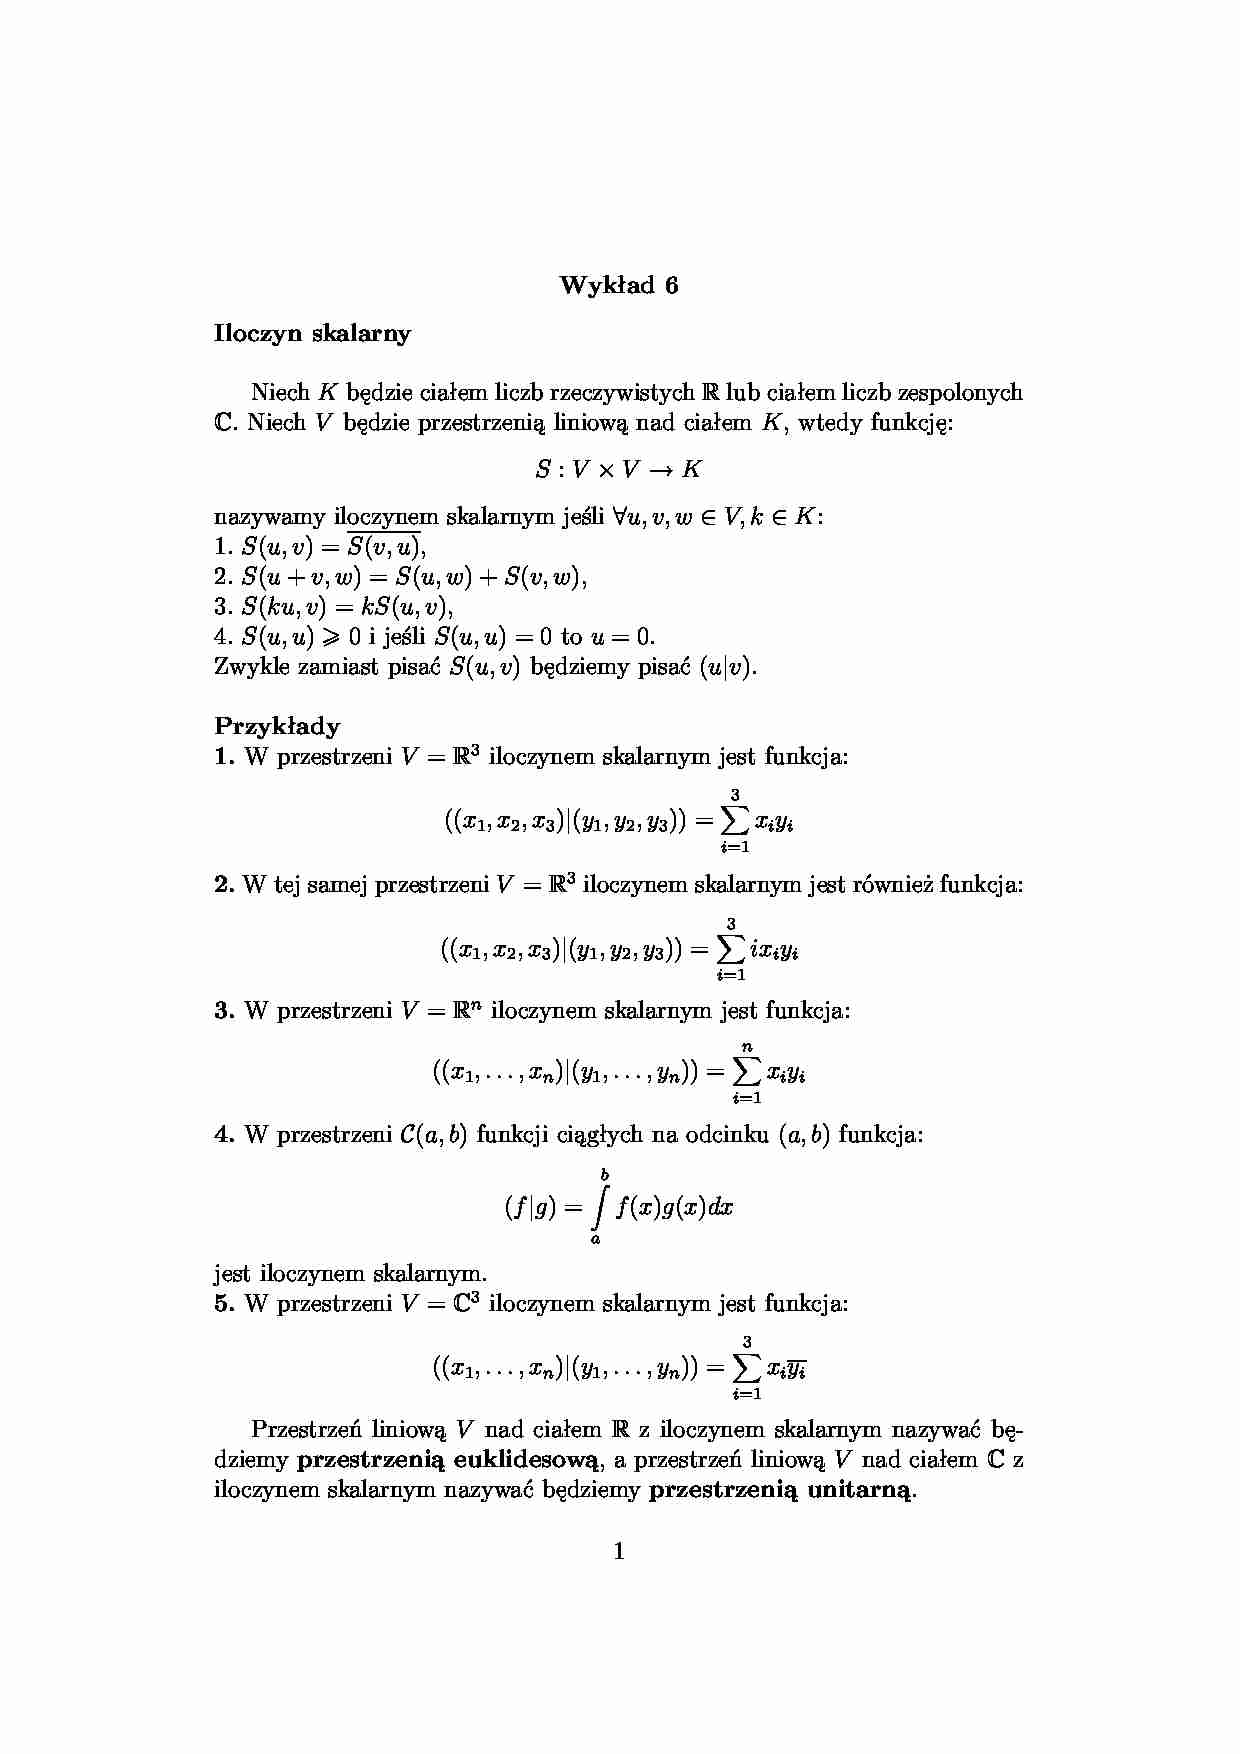 Iloczyn skalarny - algebra - strona 1